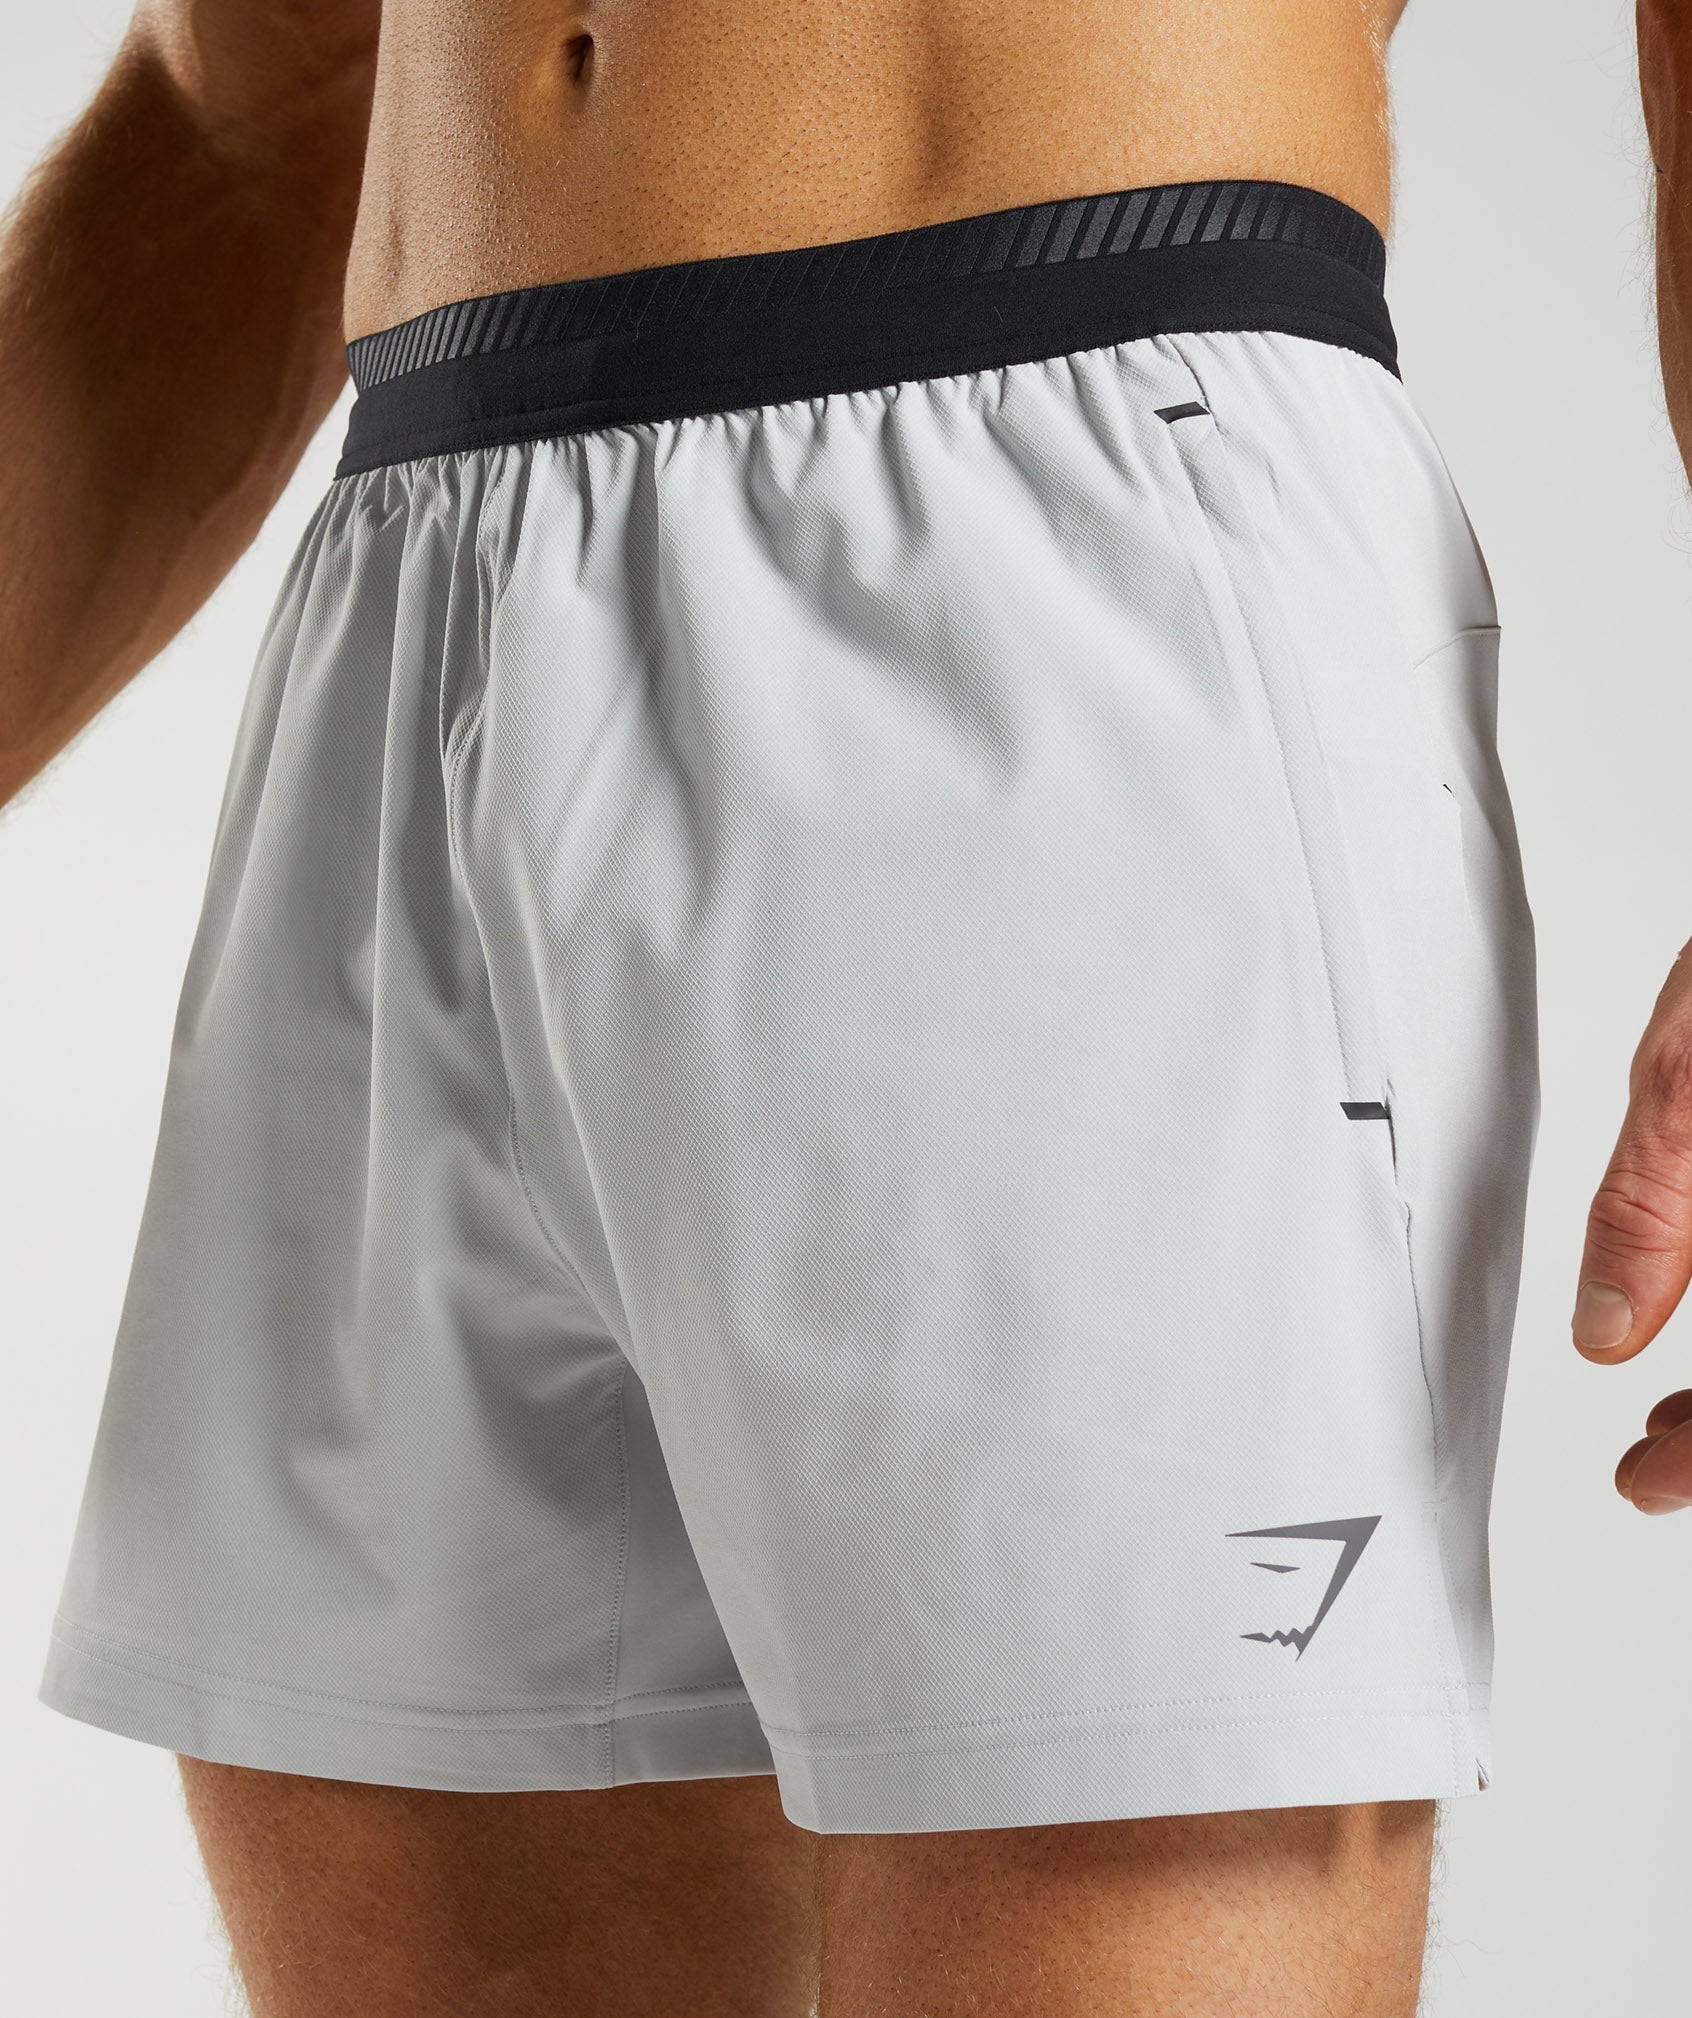 Apex 5" Hybrid Shorts in Light Grey - view 6